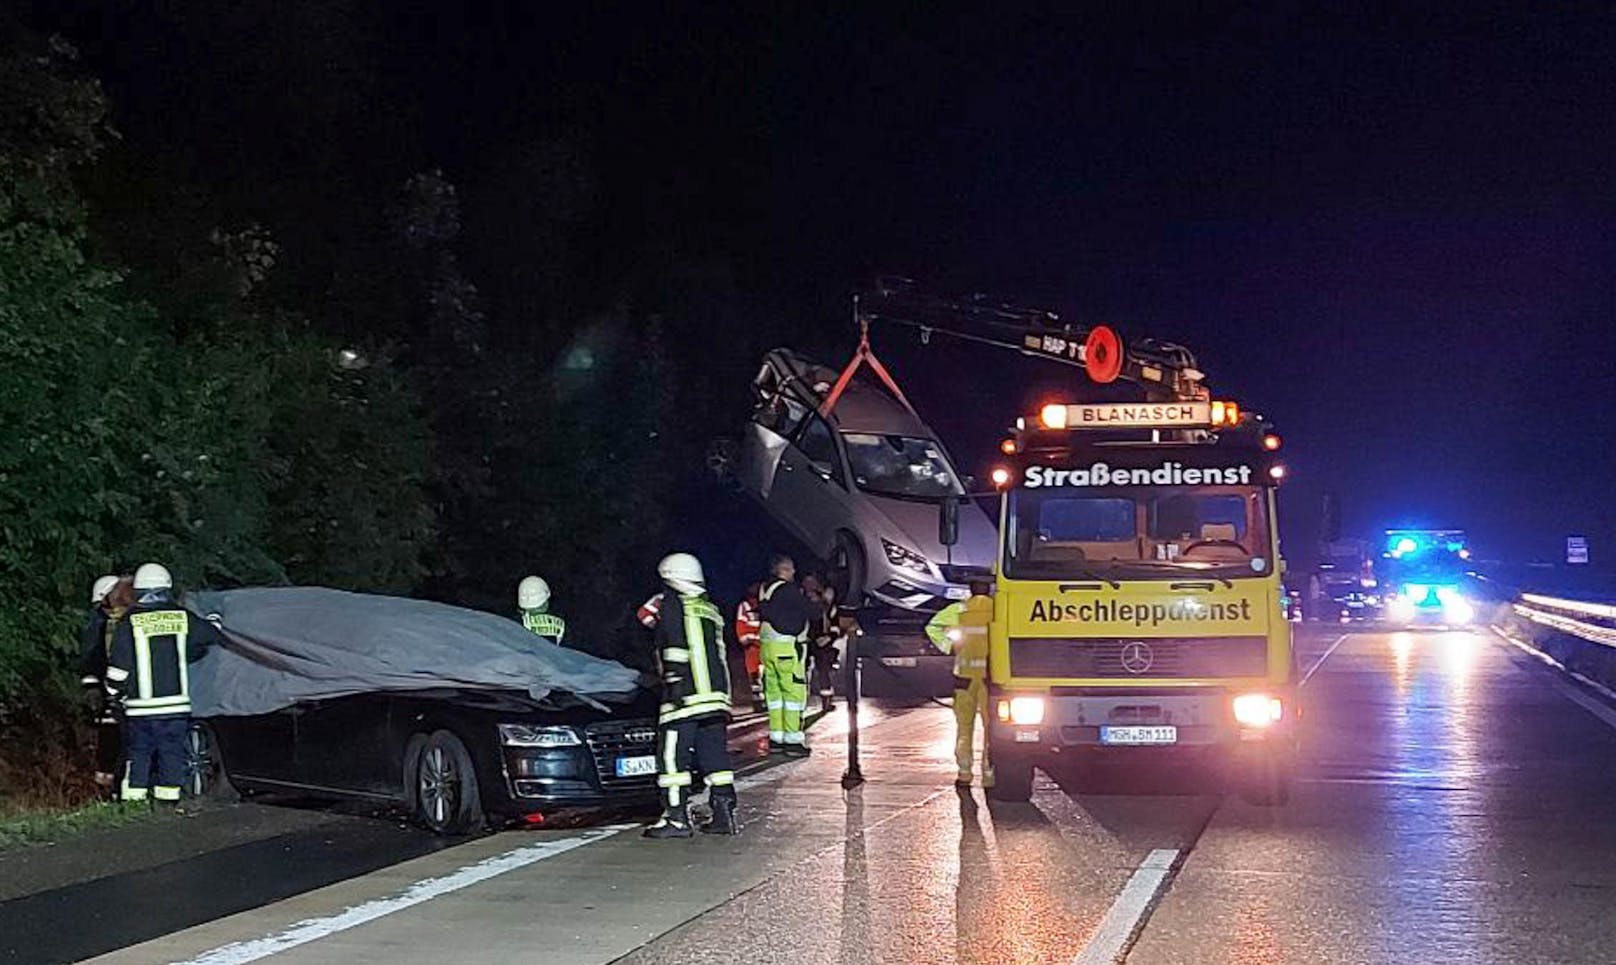 Baden-Württembergs Ministerpräsident Kretschmann ist am 31. August in einen tödlichen Verkehrsunfall verwickelt worden.